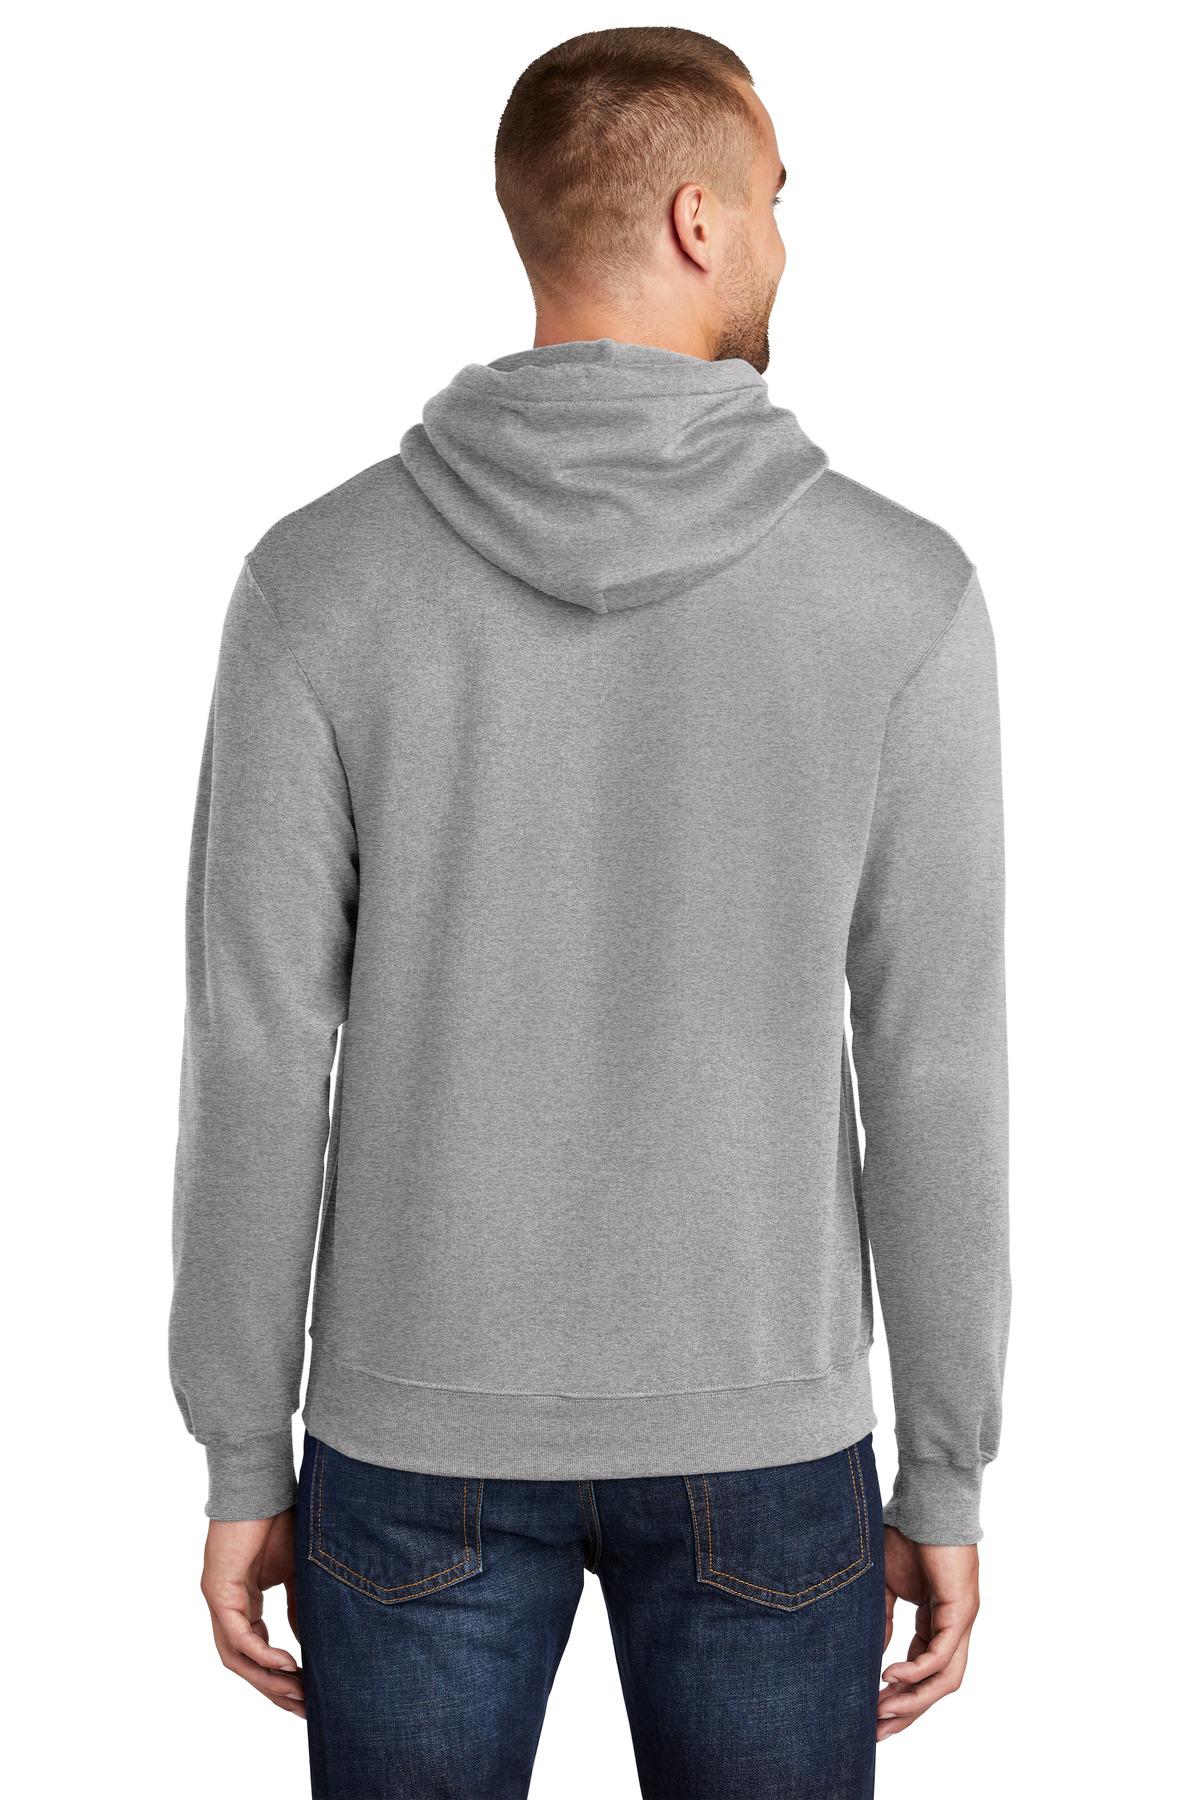 Port & Company PC78HT Tall Core Fleece Pullover Hooded Sweatshirt ...